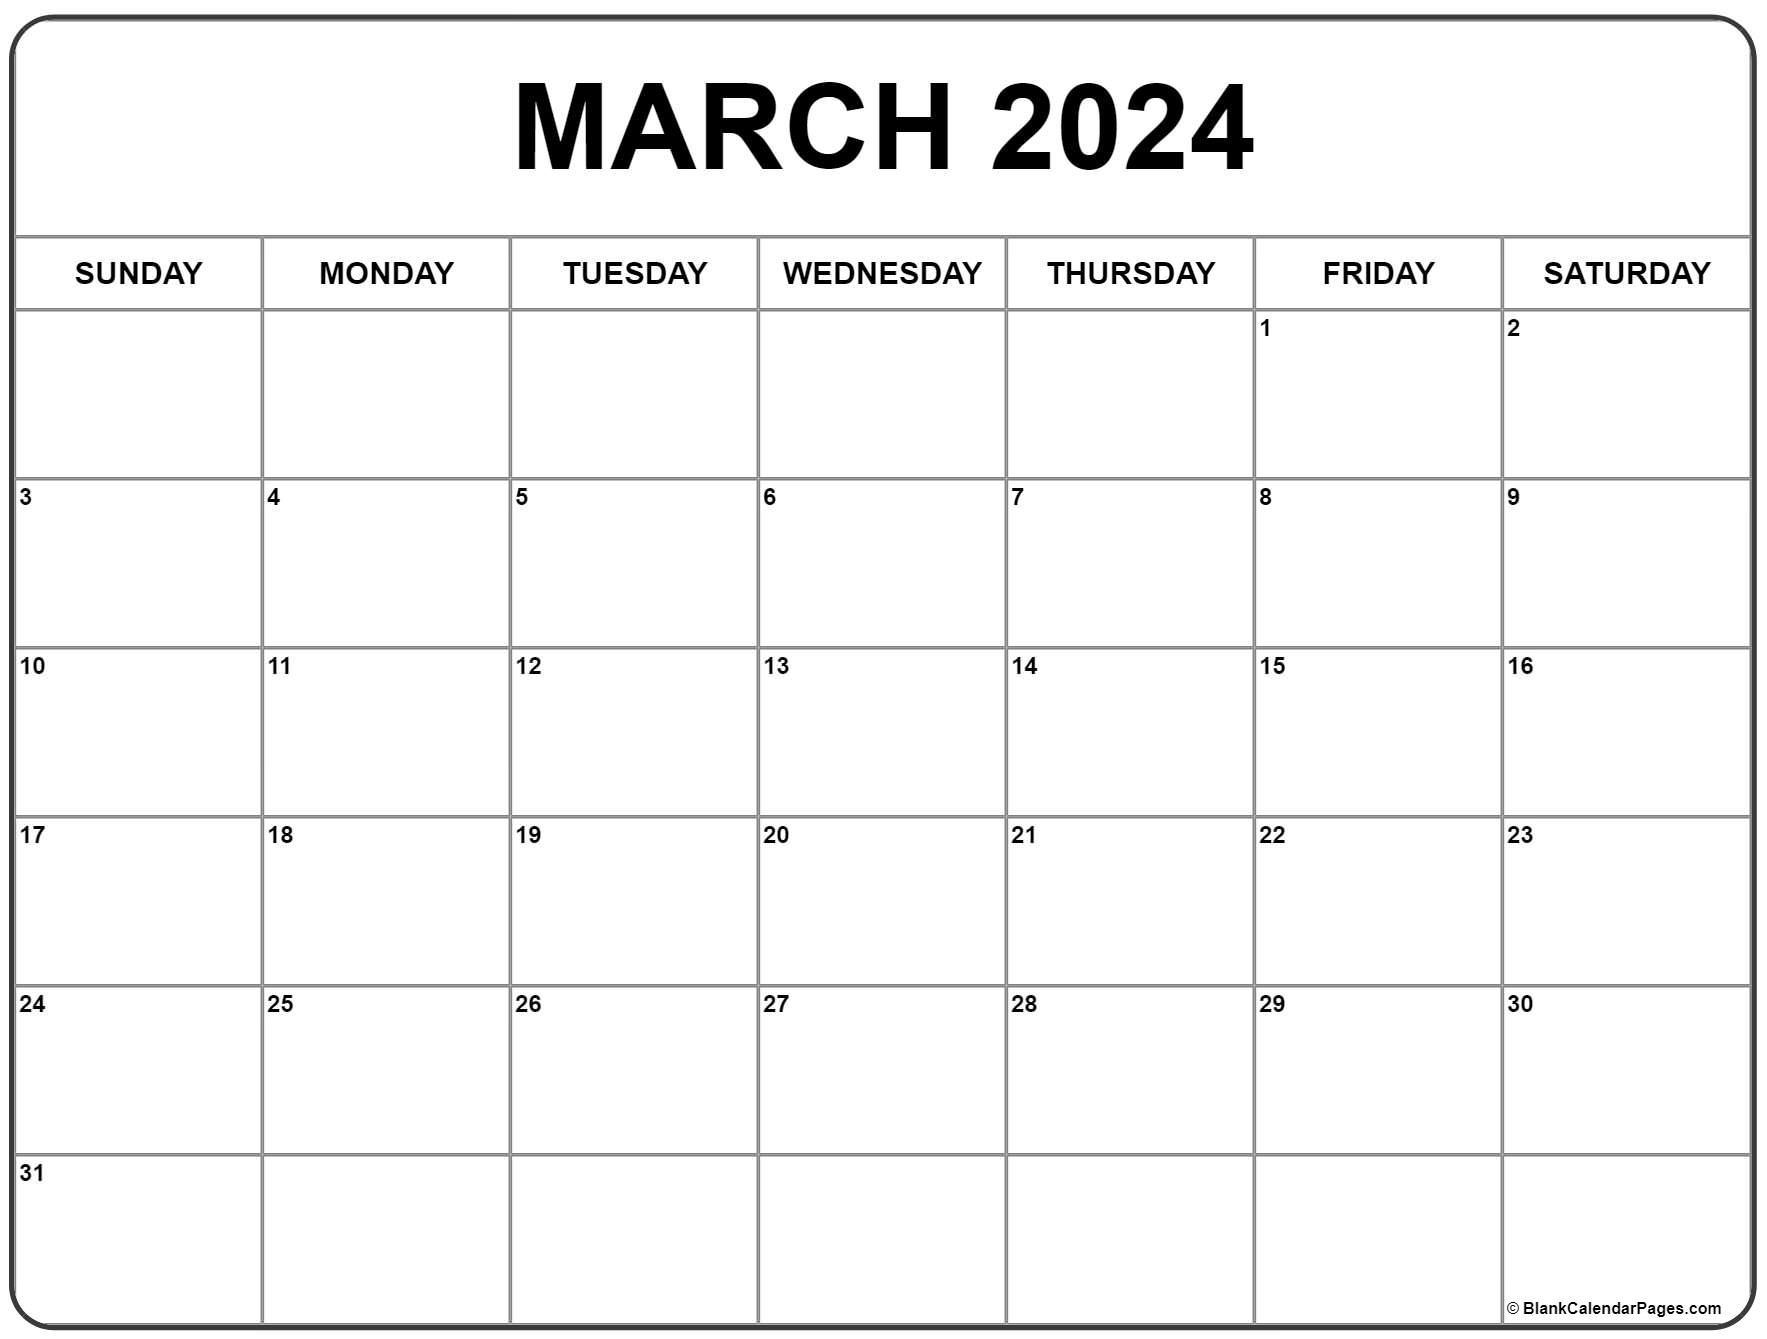 March 2024 Calendar | Free Printable Calendar for March Calendar 2024 Free Printable